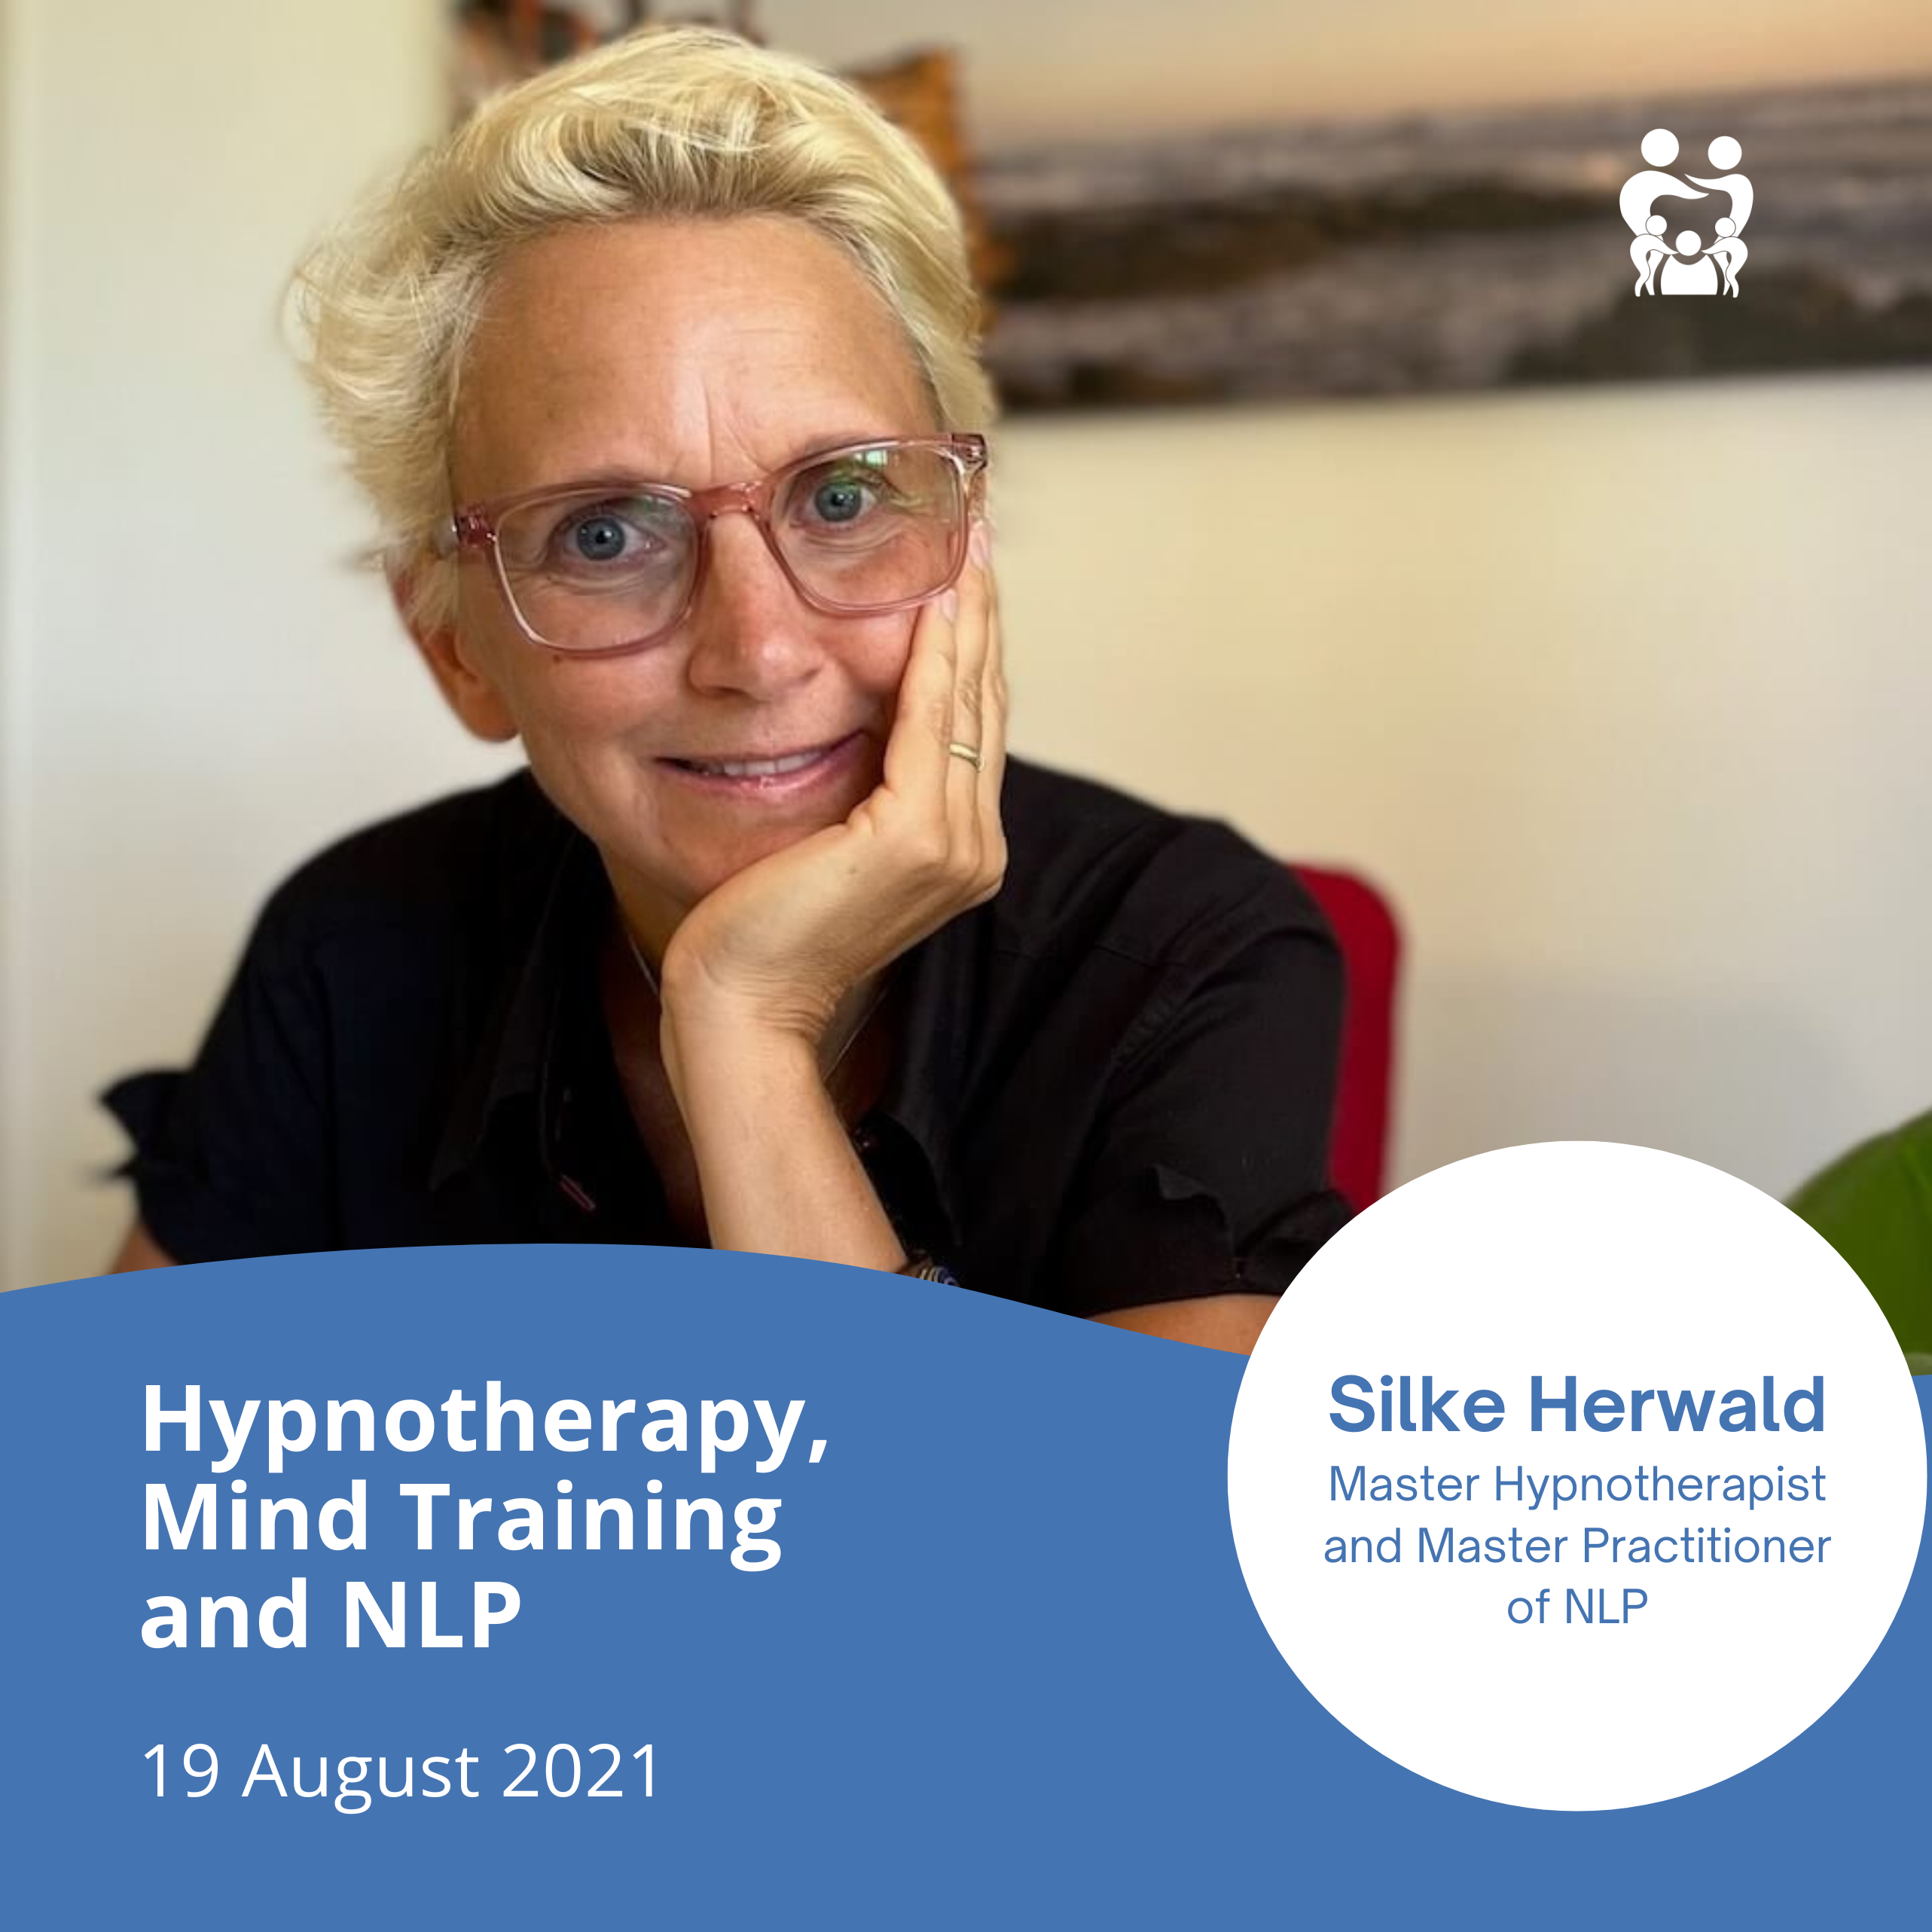 Hypnotherapy, Mind Training and NLP - Silke Herwald 19 August 2021